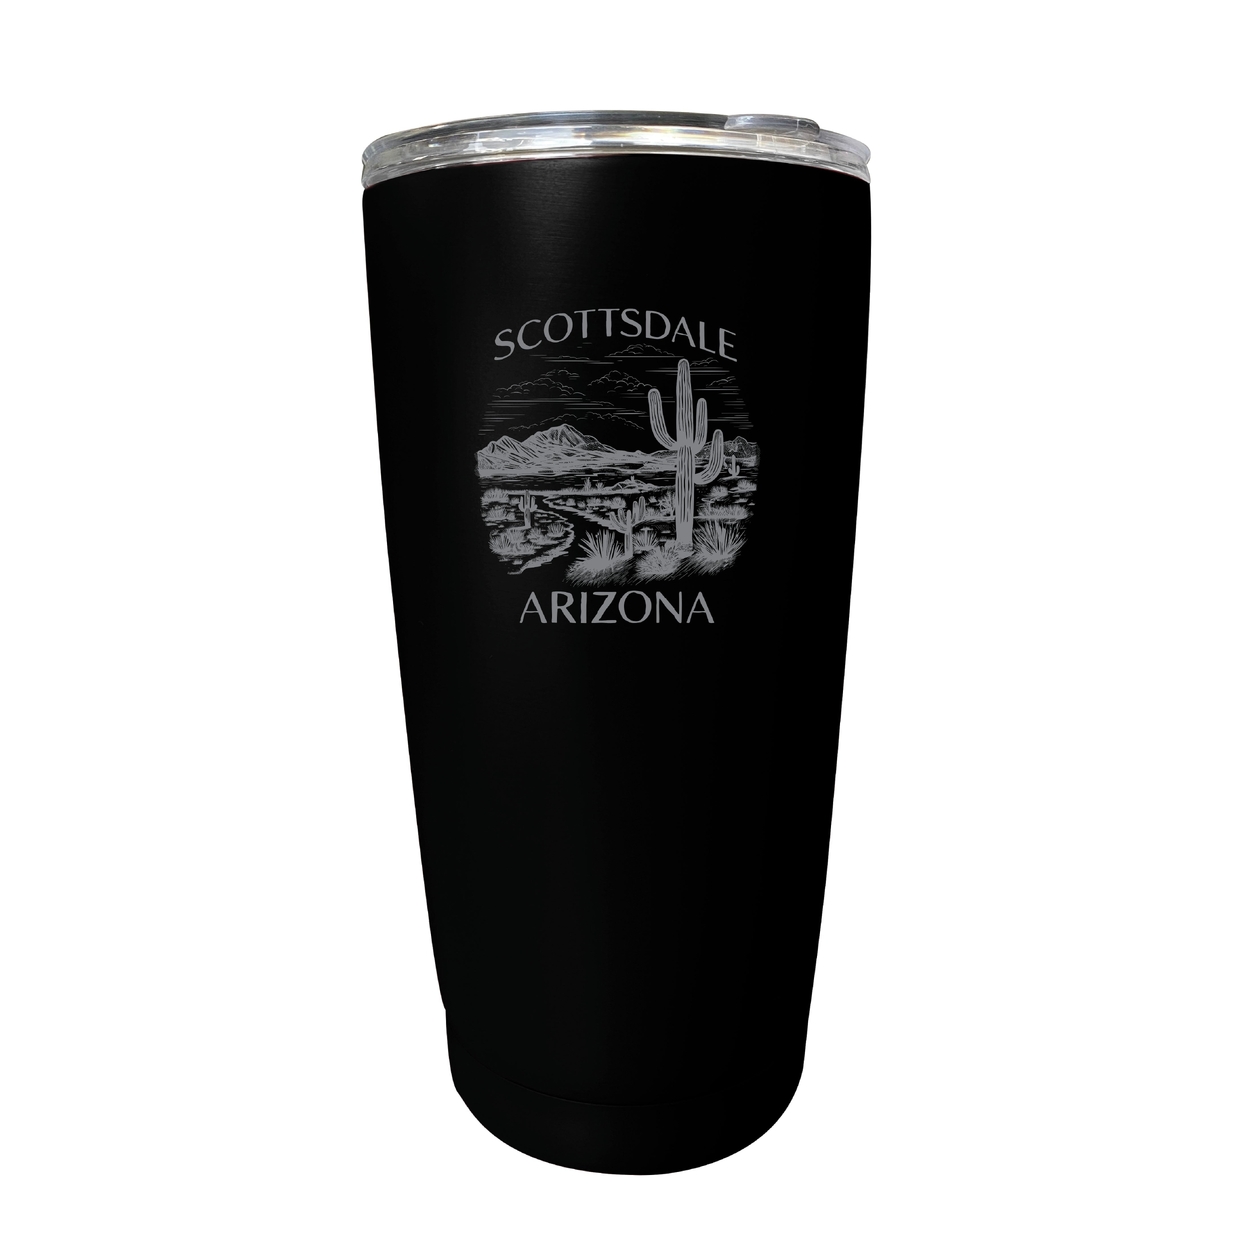 Scottsdale Arizona Souvenir 16 Oz Engraved Stainless Steel Insulated Tumbler - Black,,4-Pack